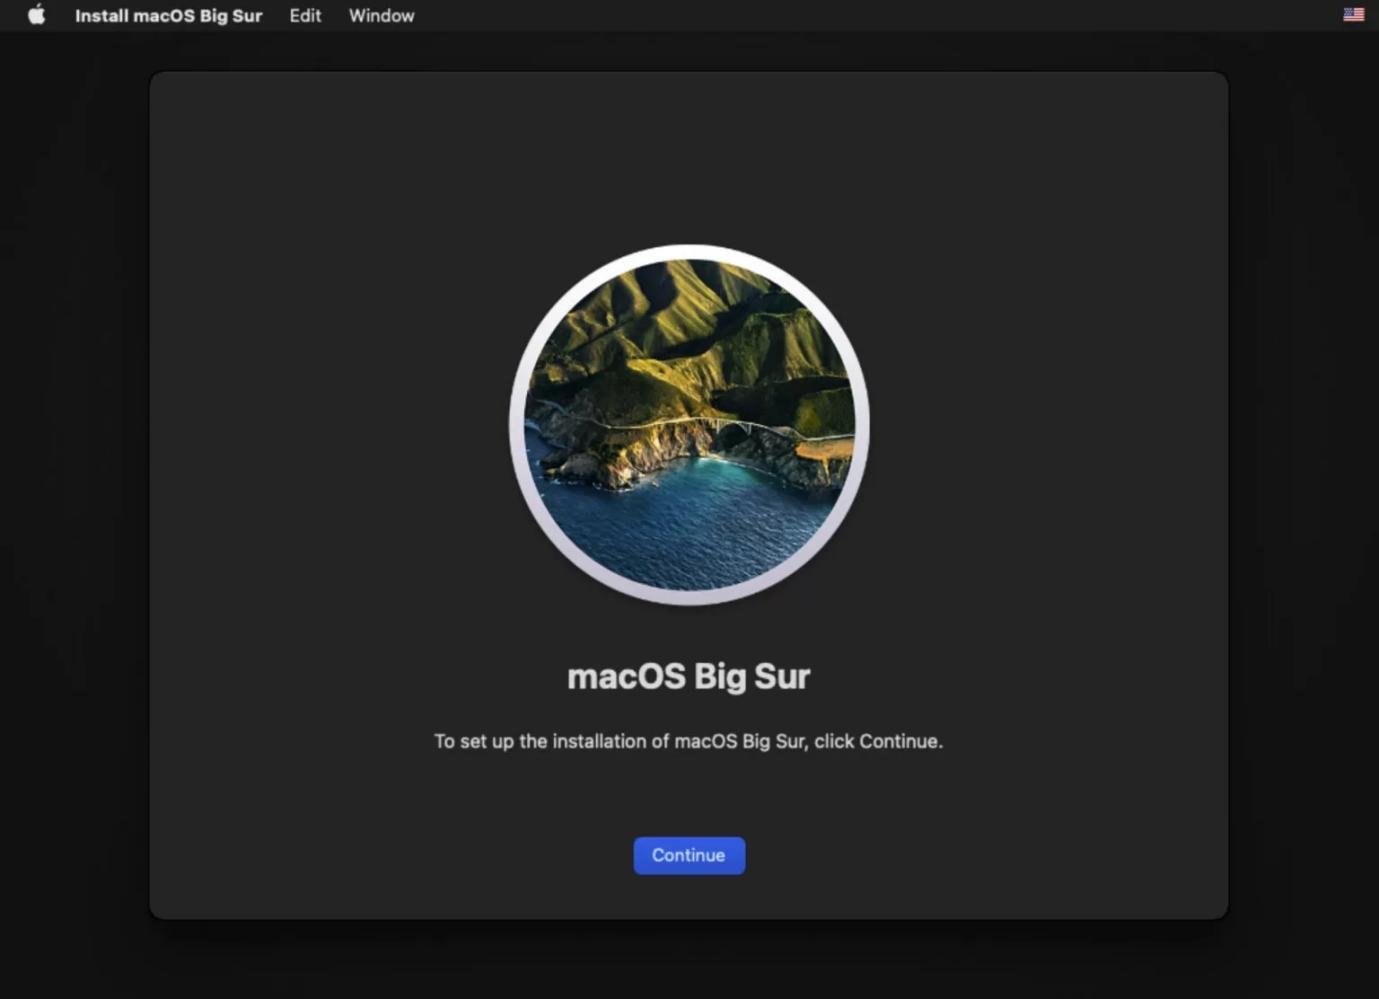 reinstall macos step 2 | No Startup Disk on Mac